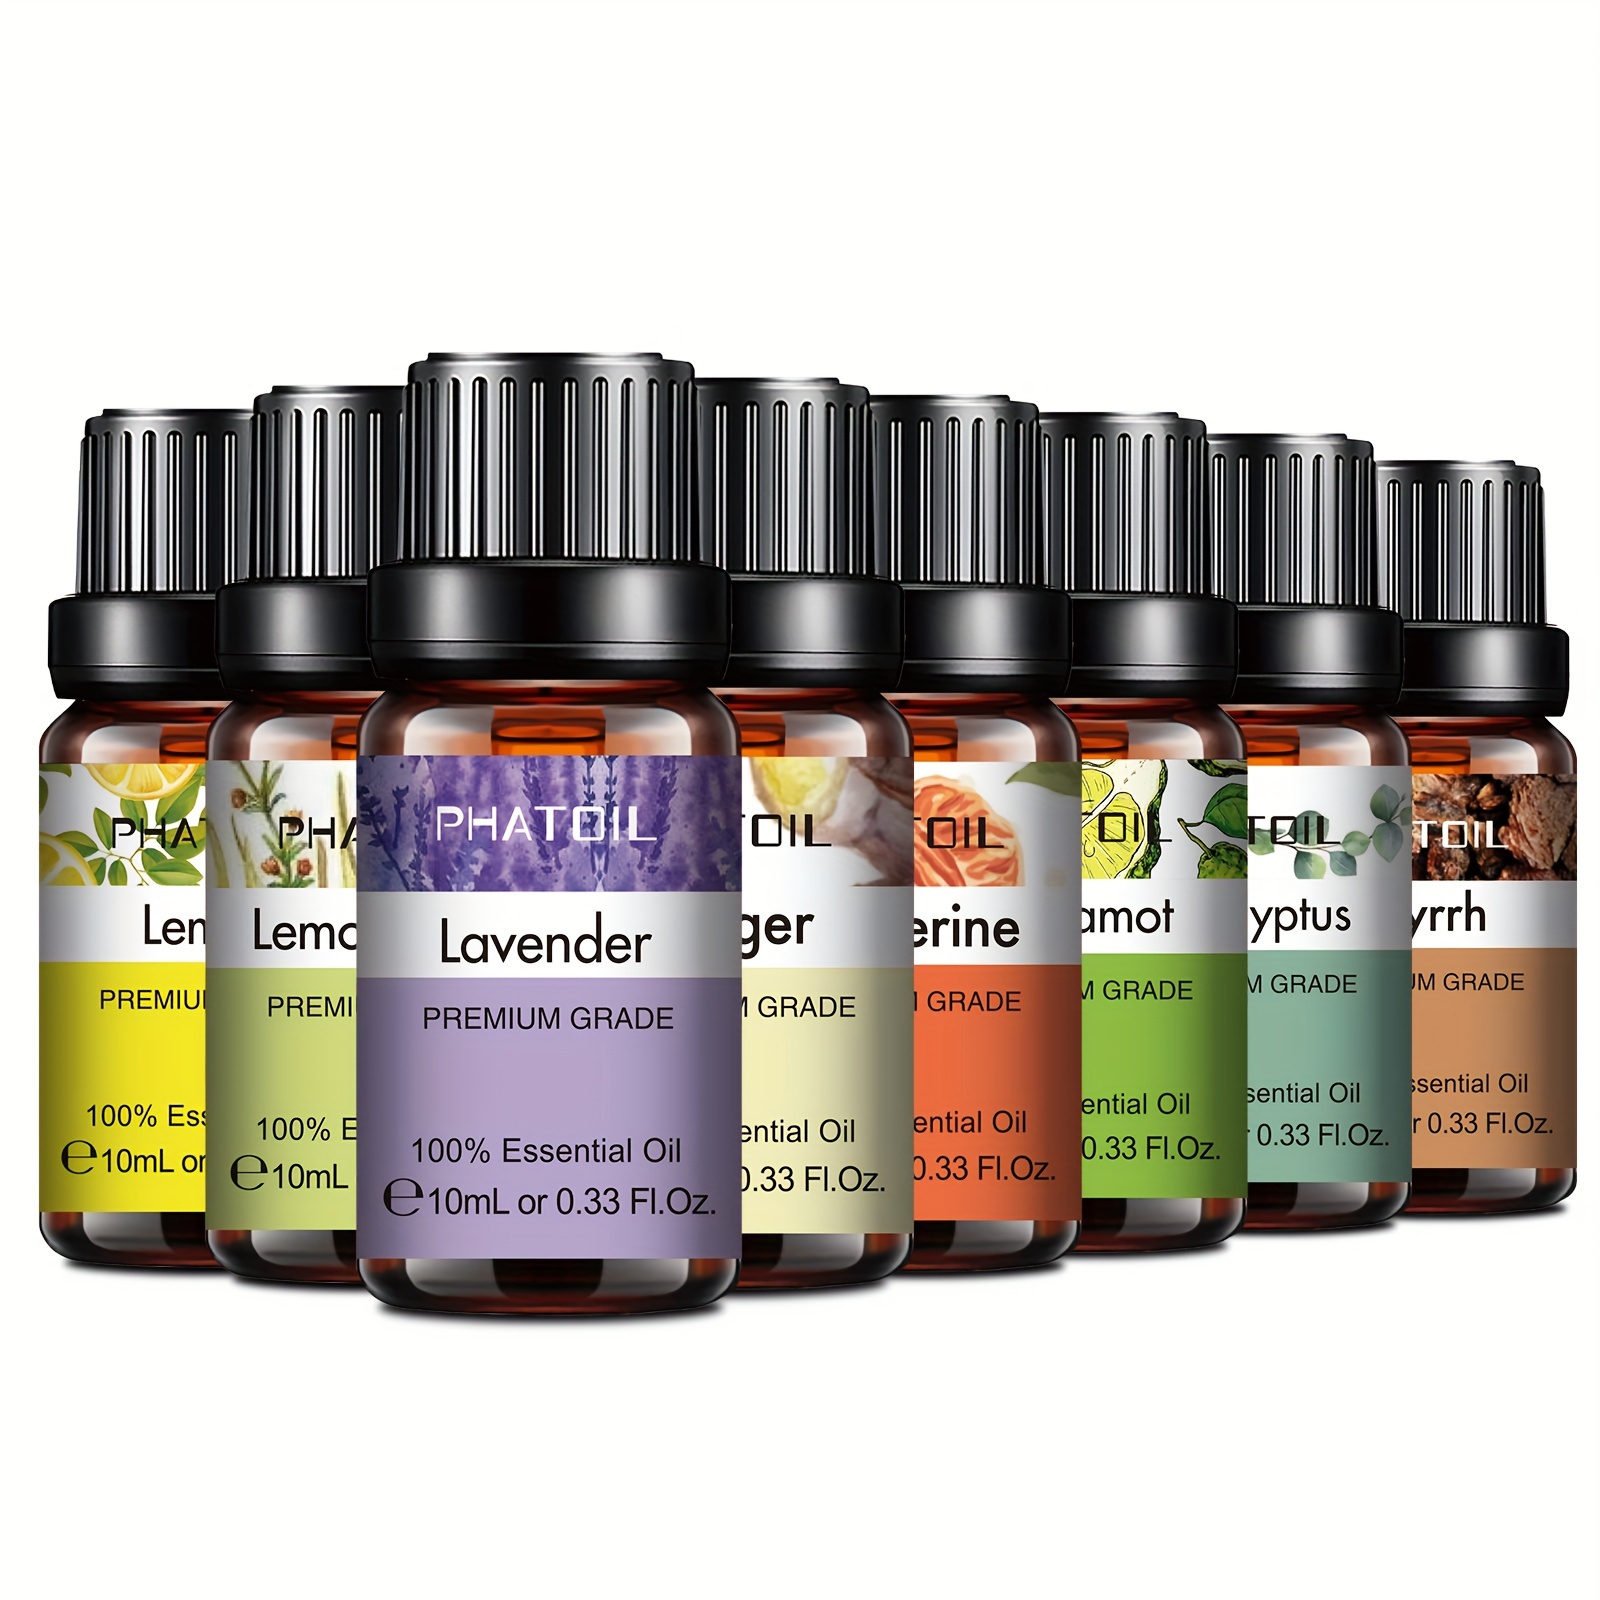 

Essential Oil Series, Therapeutic Grade, 10ml Each, Essential Oil For Diffuser, Hair Care, Skin Care - Lavender, Tea Tree, Eucalyptus, Lemon & More